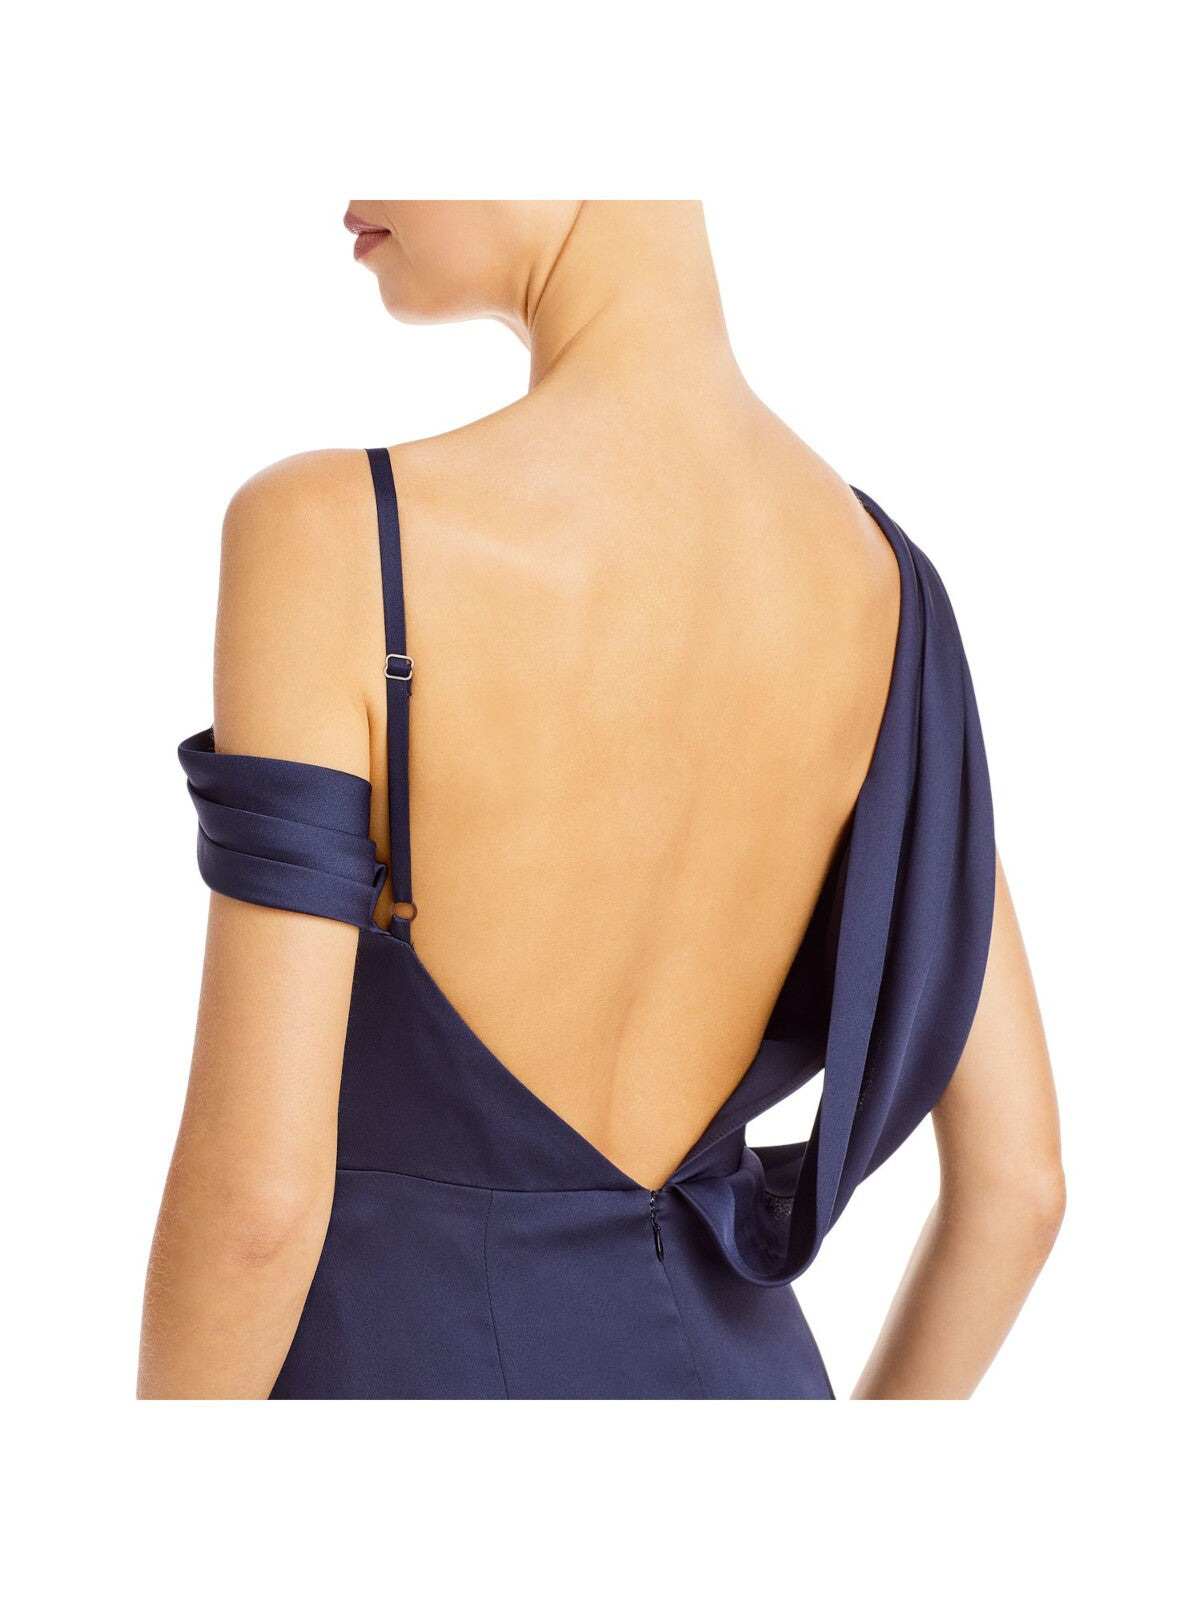 AQUA FORMAL Womens Zippered Adjustable Lined Sleeveless Asymmetrical Neckline Full-Length Evening Gown Dress